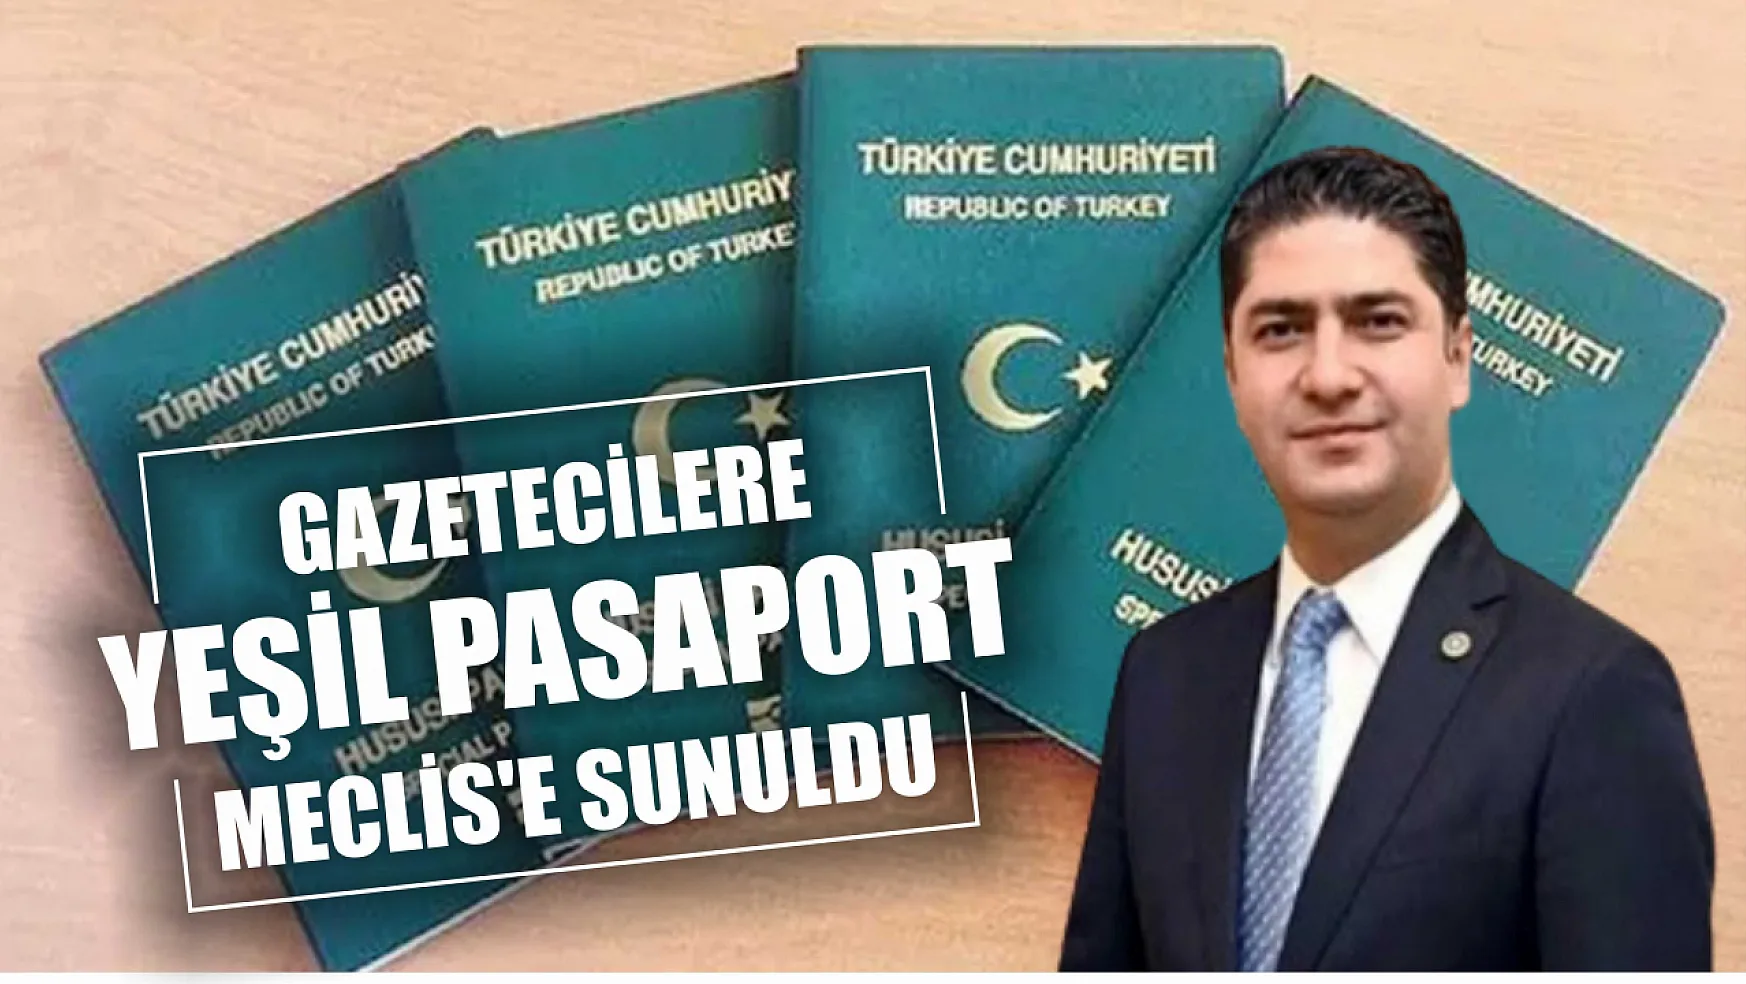 Gazetecilere Yeşil Pasaport Meclis'e sunuldu